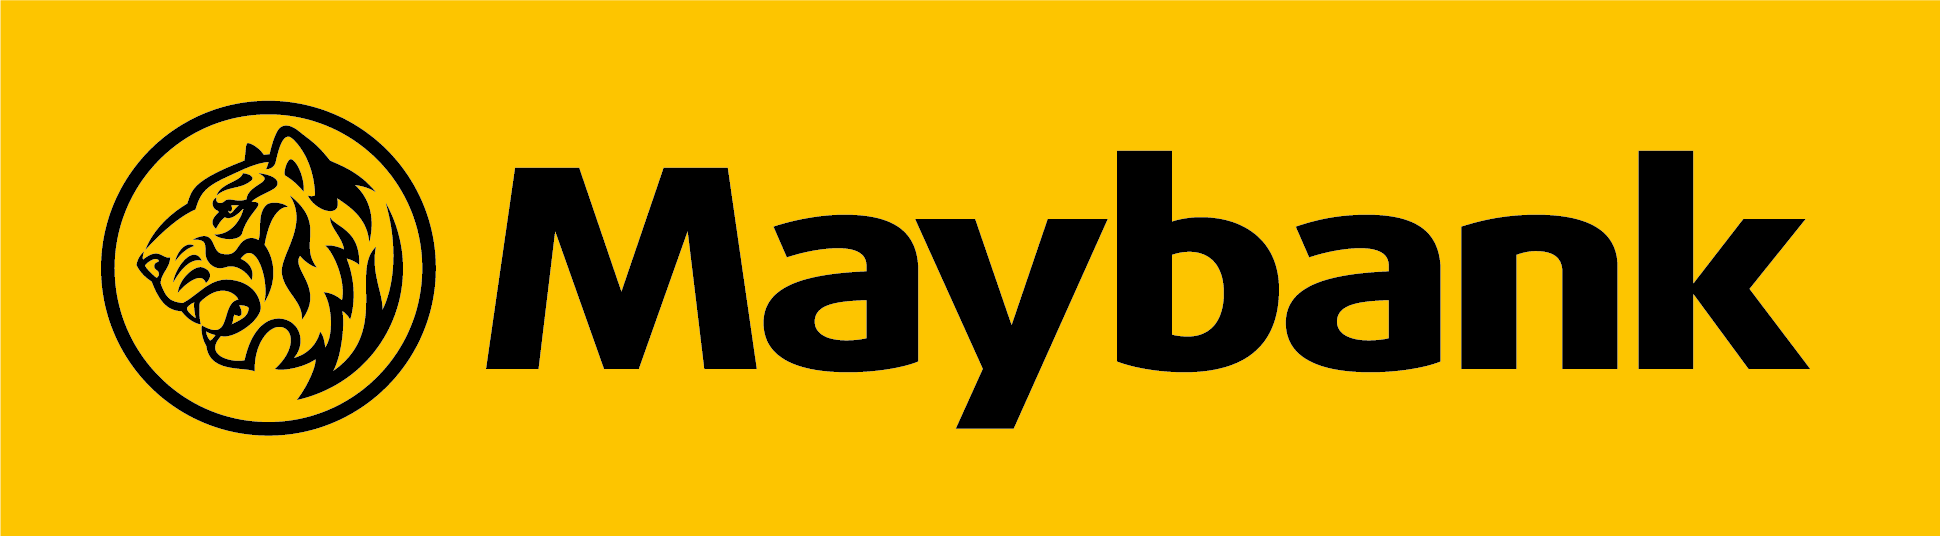 Maybank Singapore logo